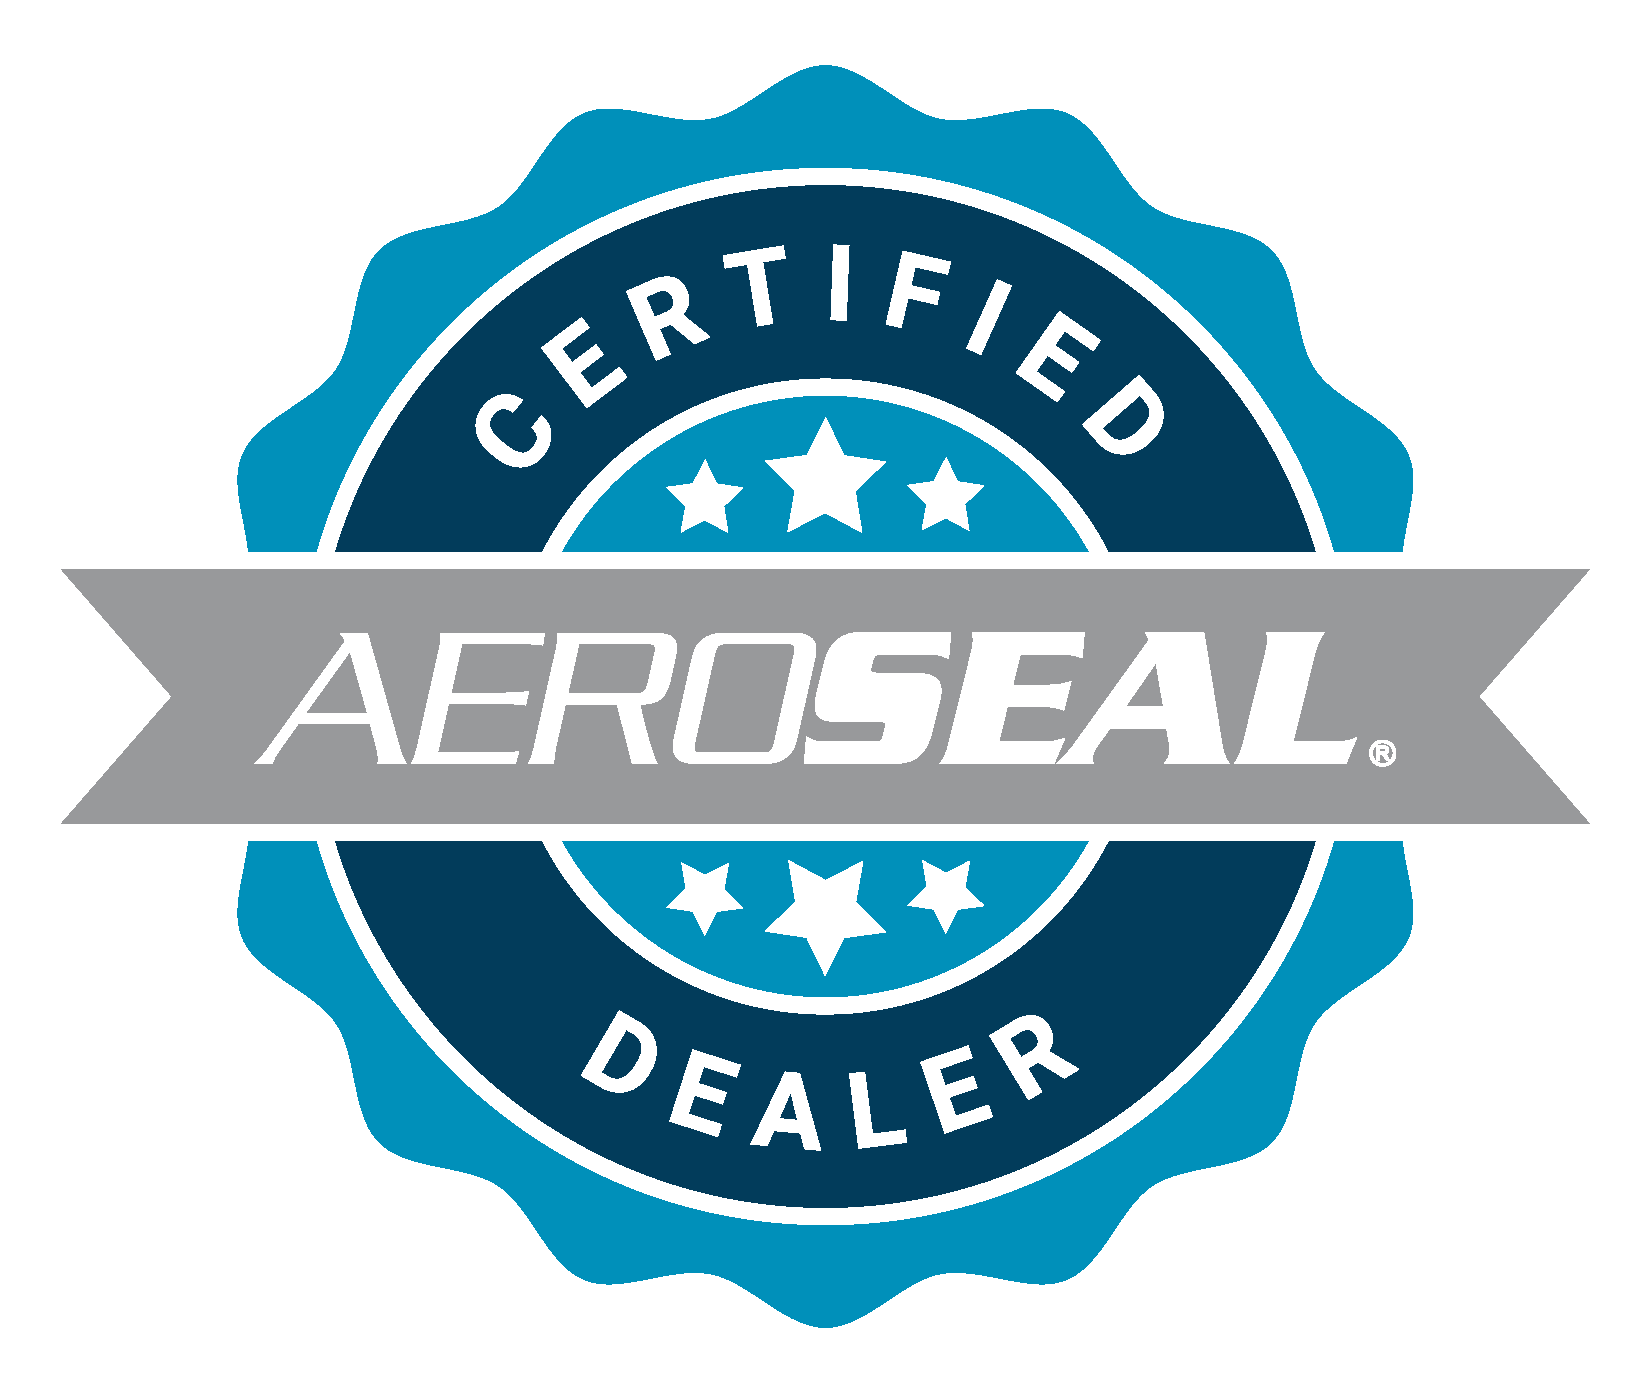 Certified Dealer Seal